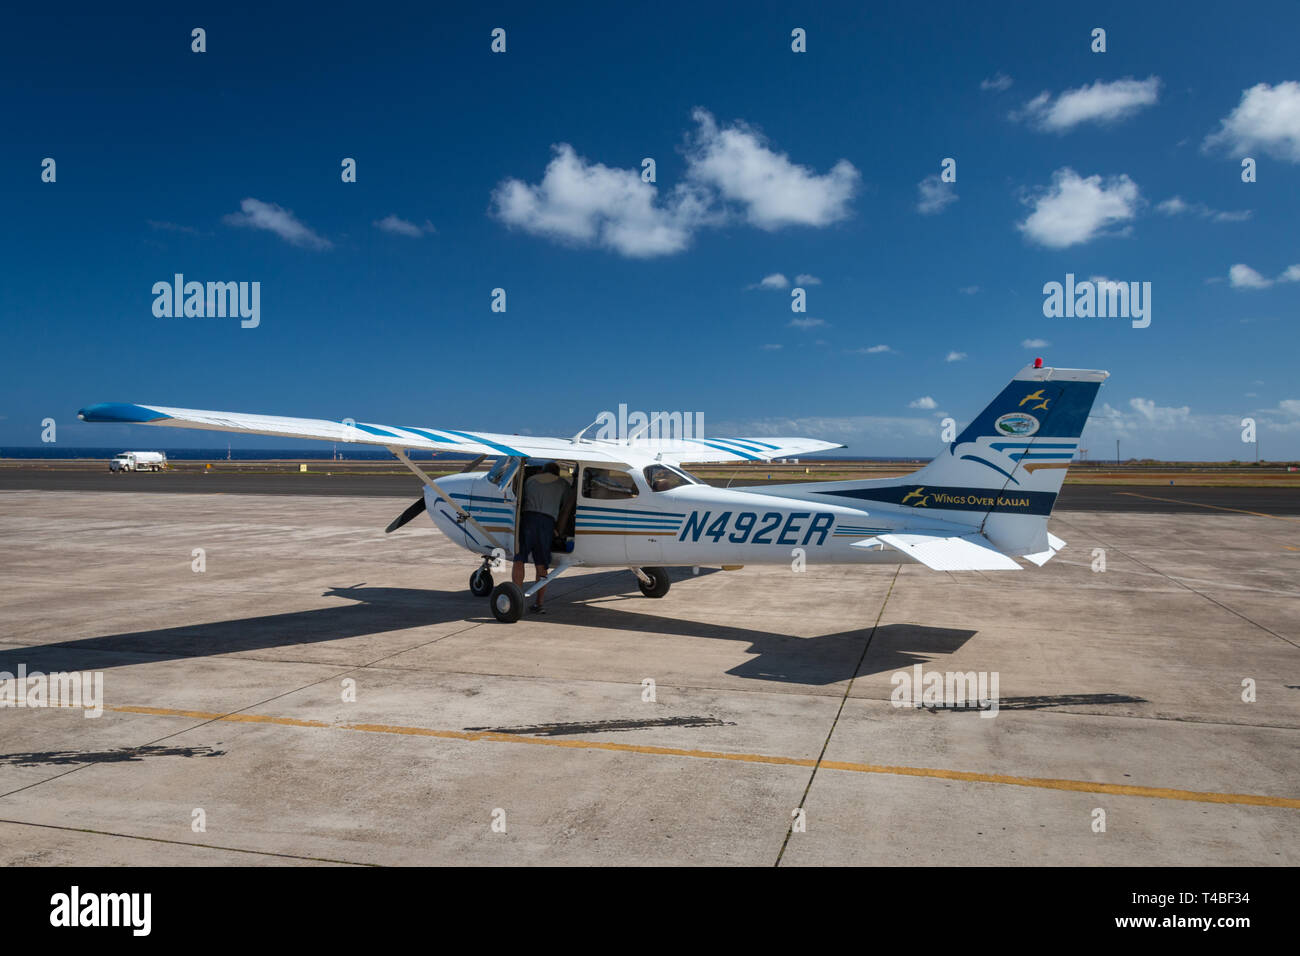 Lihue, HI, USA - November 1, 2016: A Cessna airplane of “Wings over Kauai” waiting for the next flight at Lihue airport Stock Photo